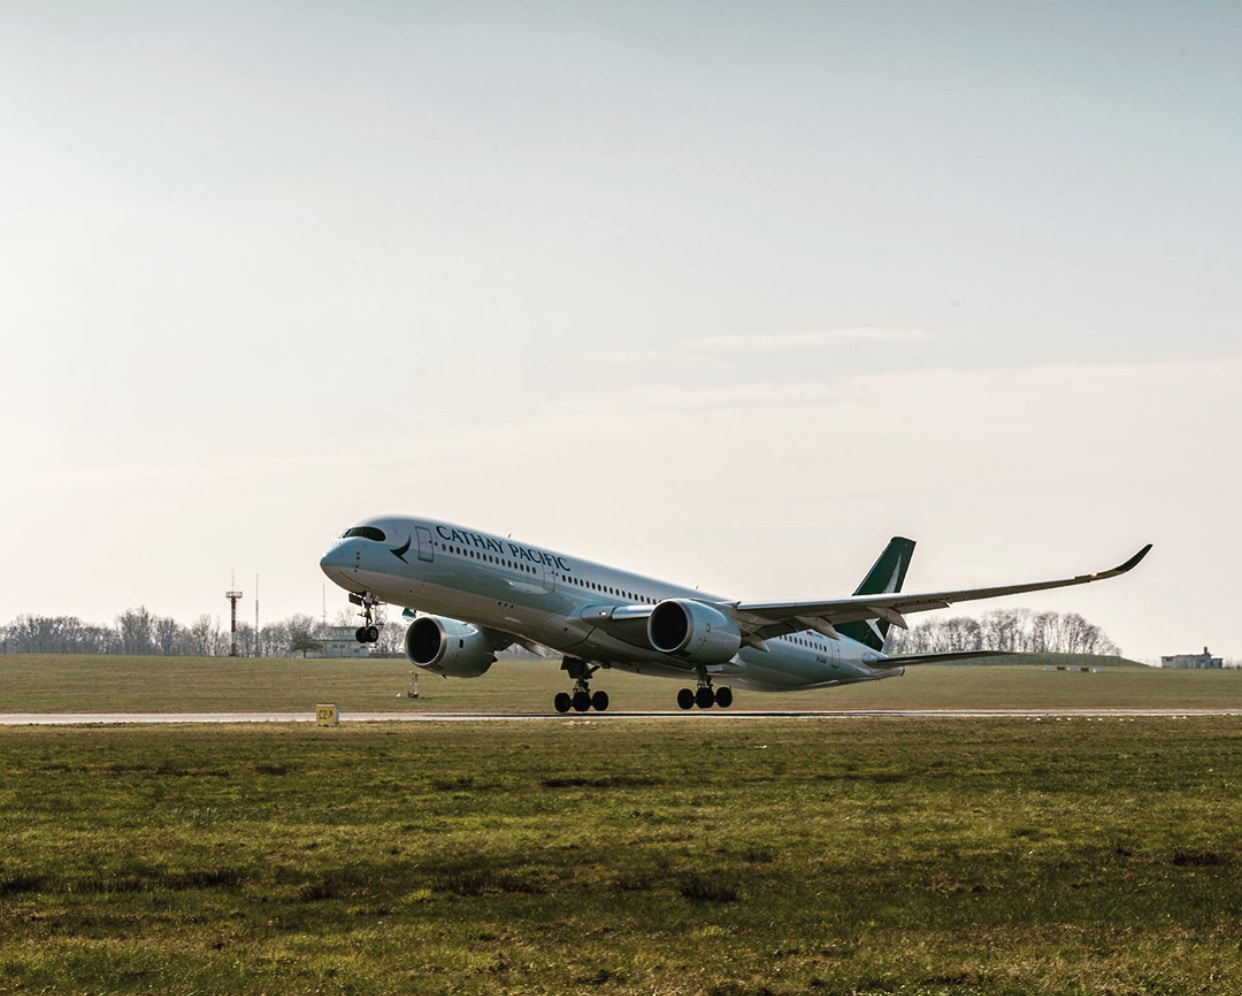 Belgian Constitutional Court dismisses appeals against law introducing air passenger duty tax